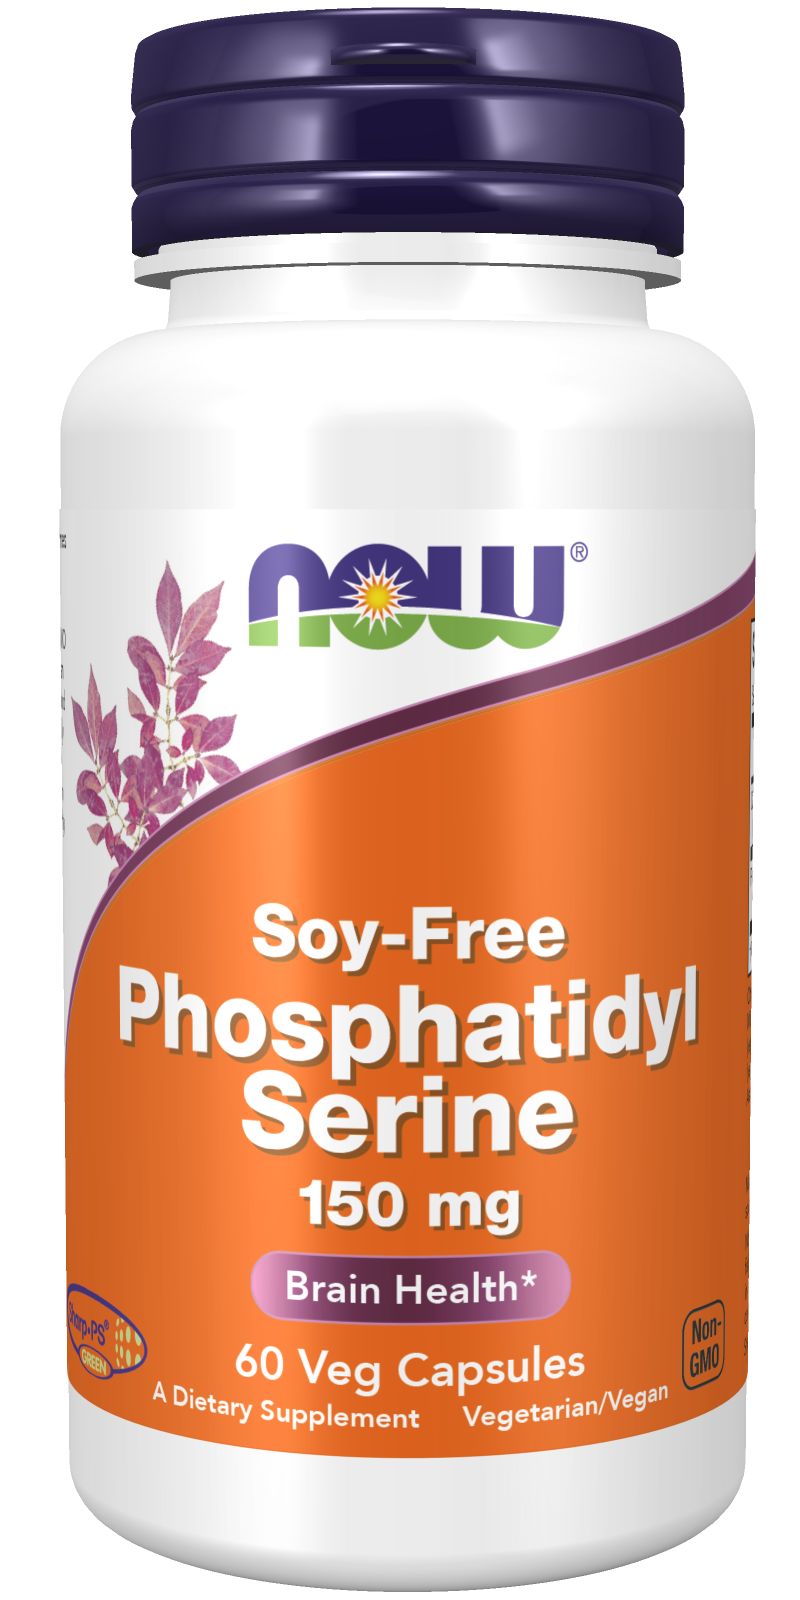 Phosphatidyl Serine, Soy-Free 150 mg Veg Capsules Bottle Front